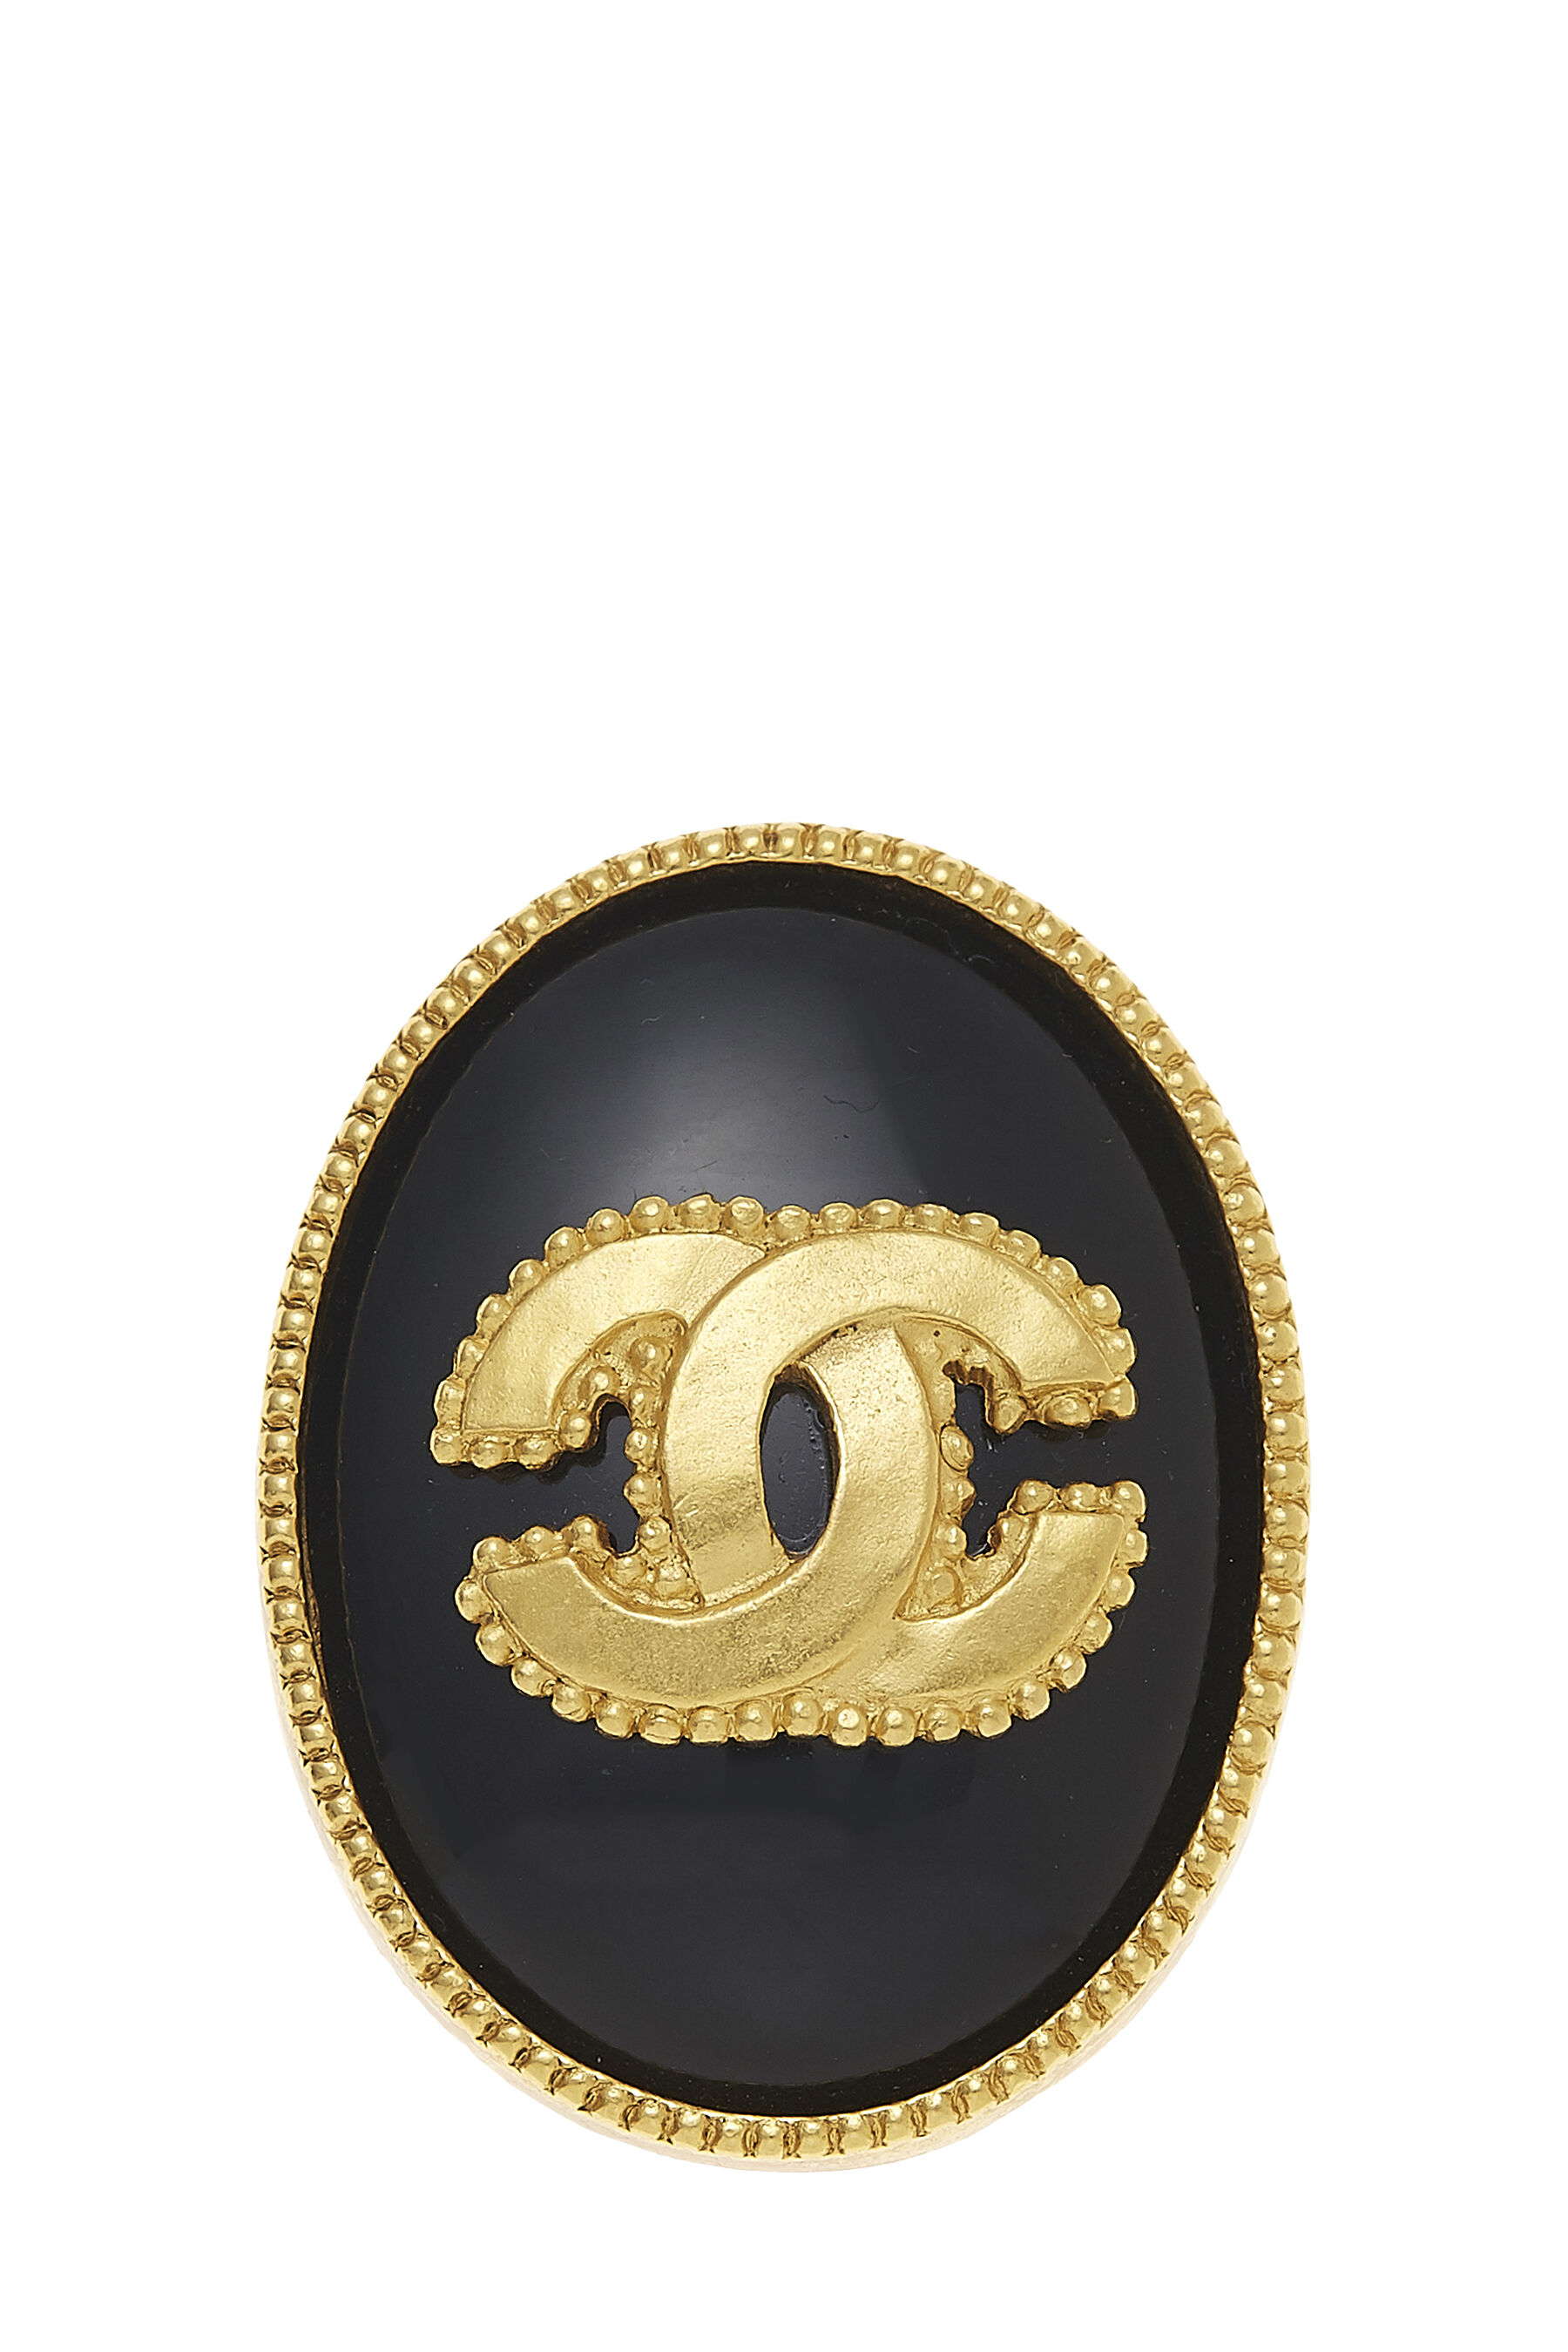 Chanel Vintage Gold Plated CC Black Enamel Top Jacket Pin